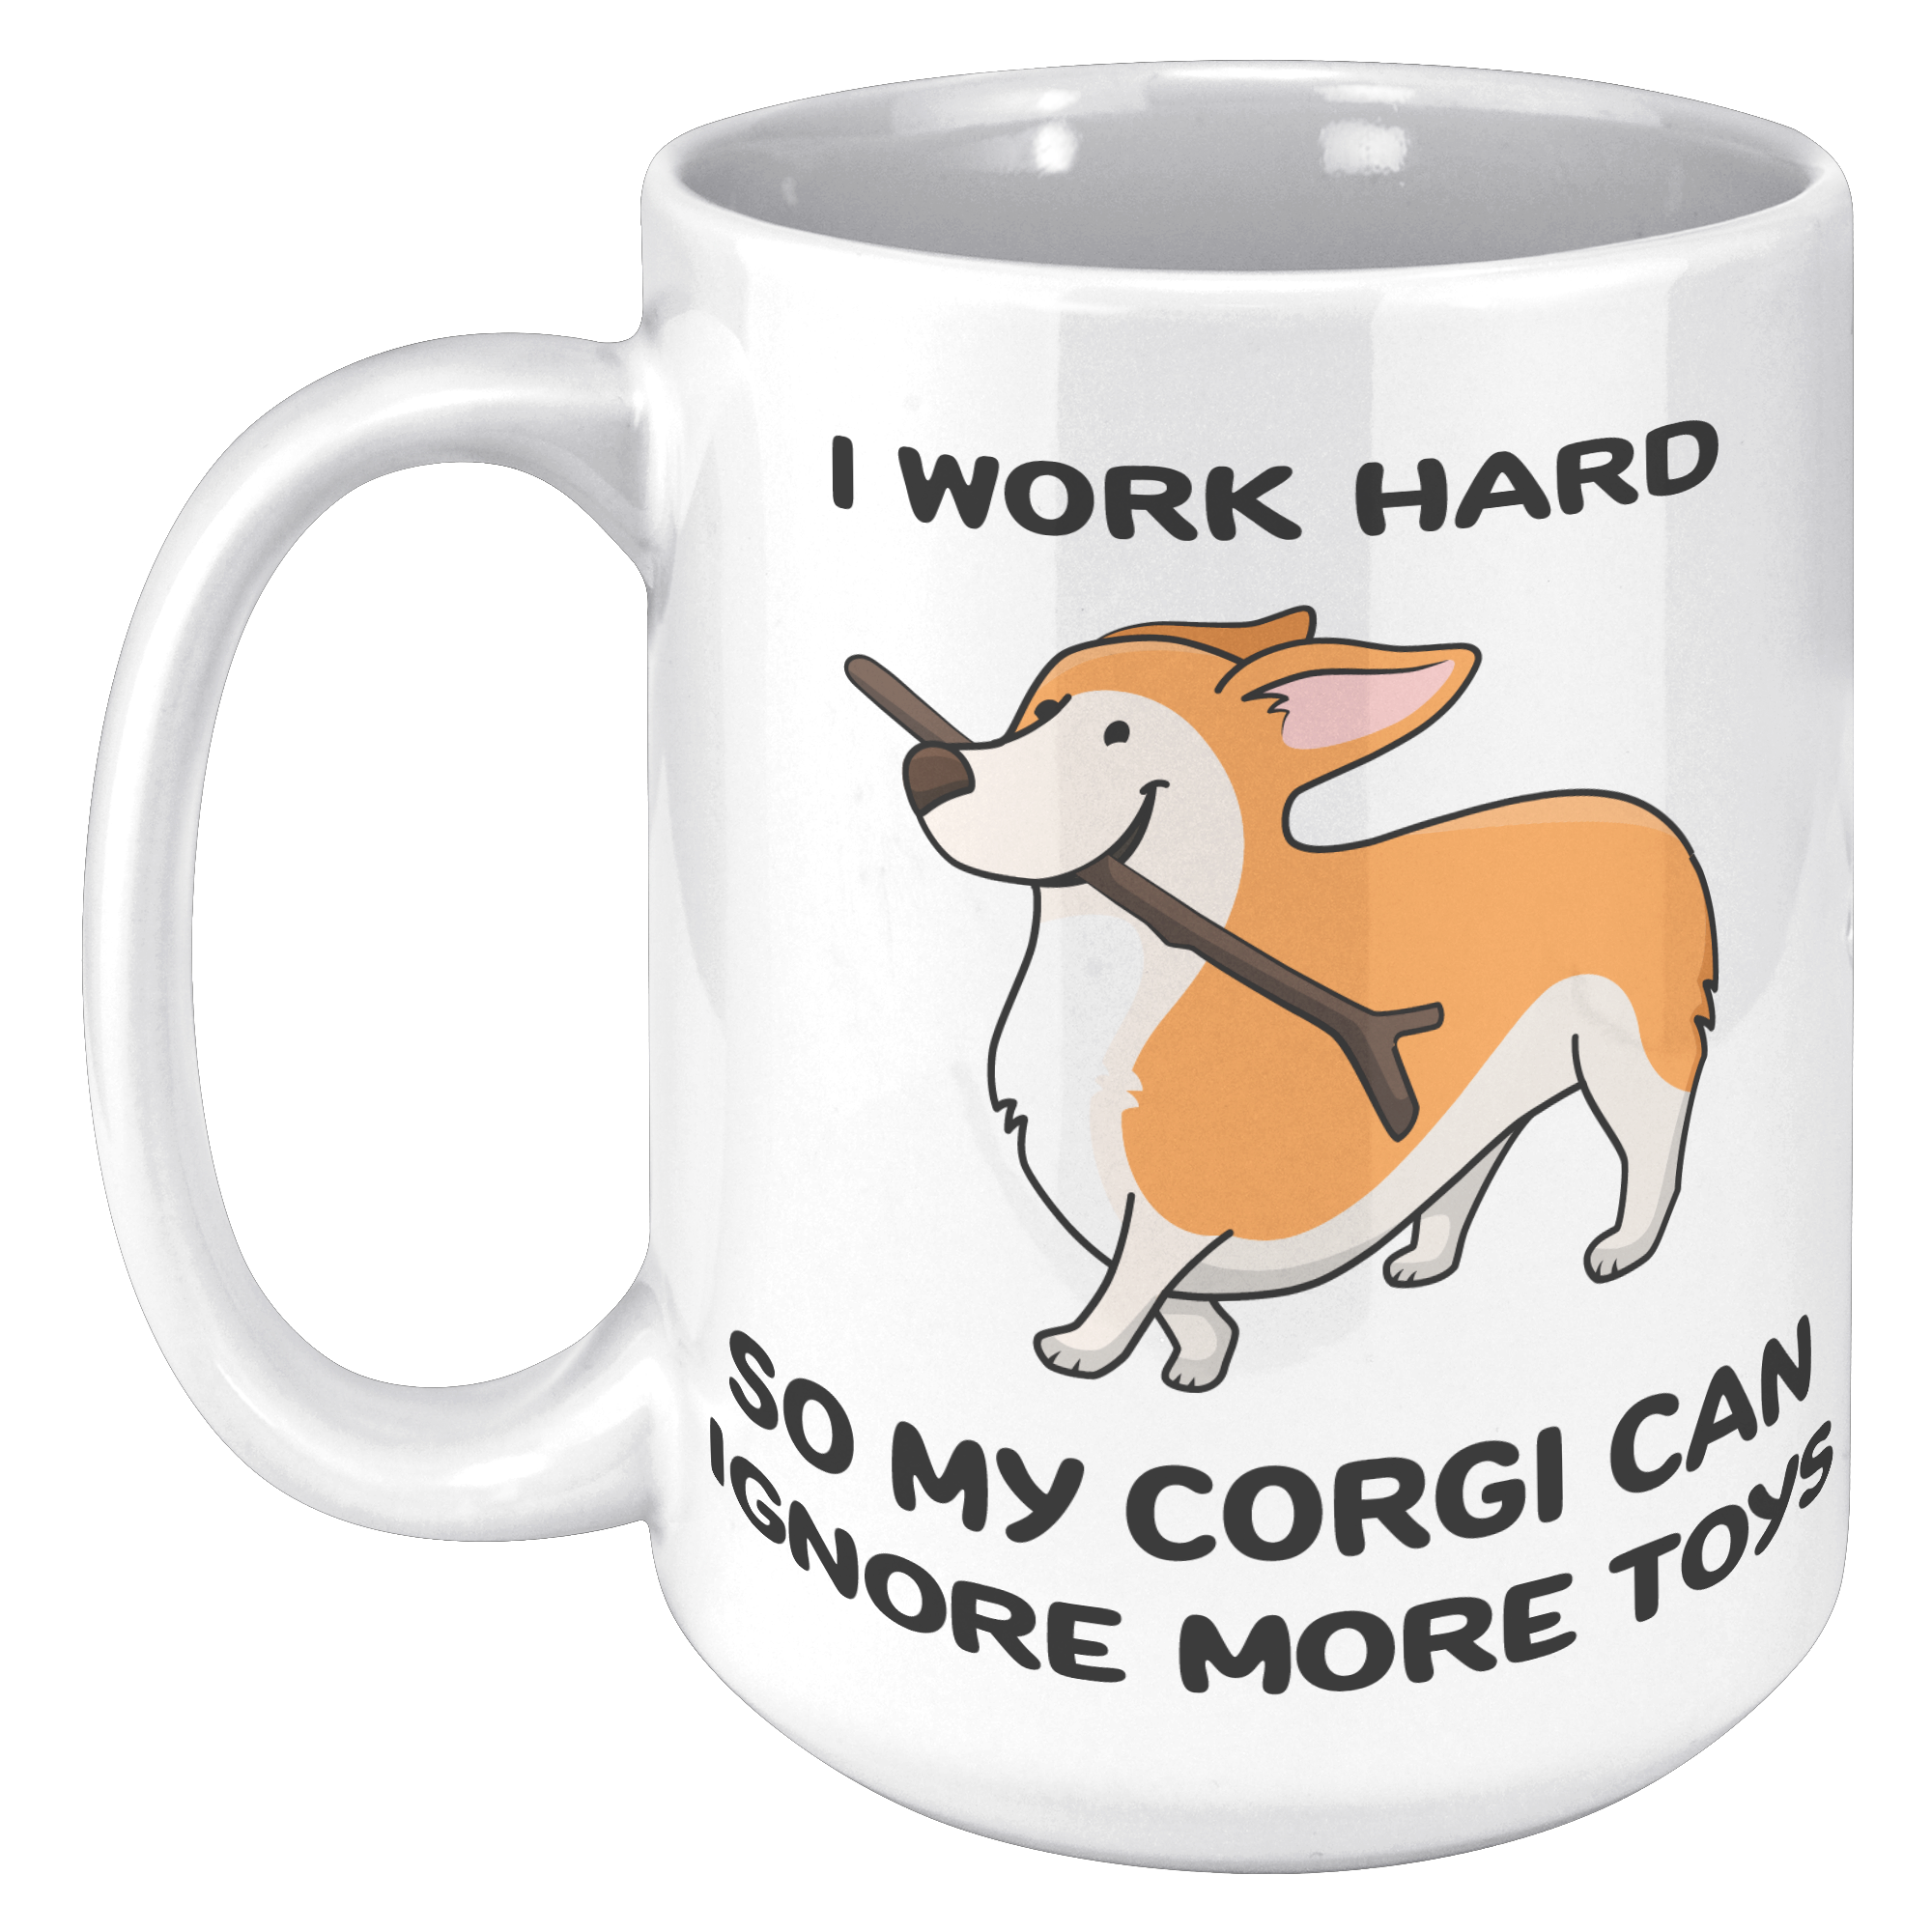 I Work Hard So My Corgi Can Ignore More Toys Mug